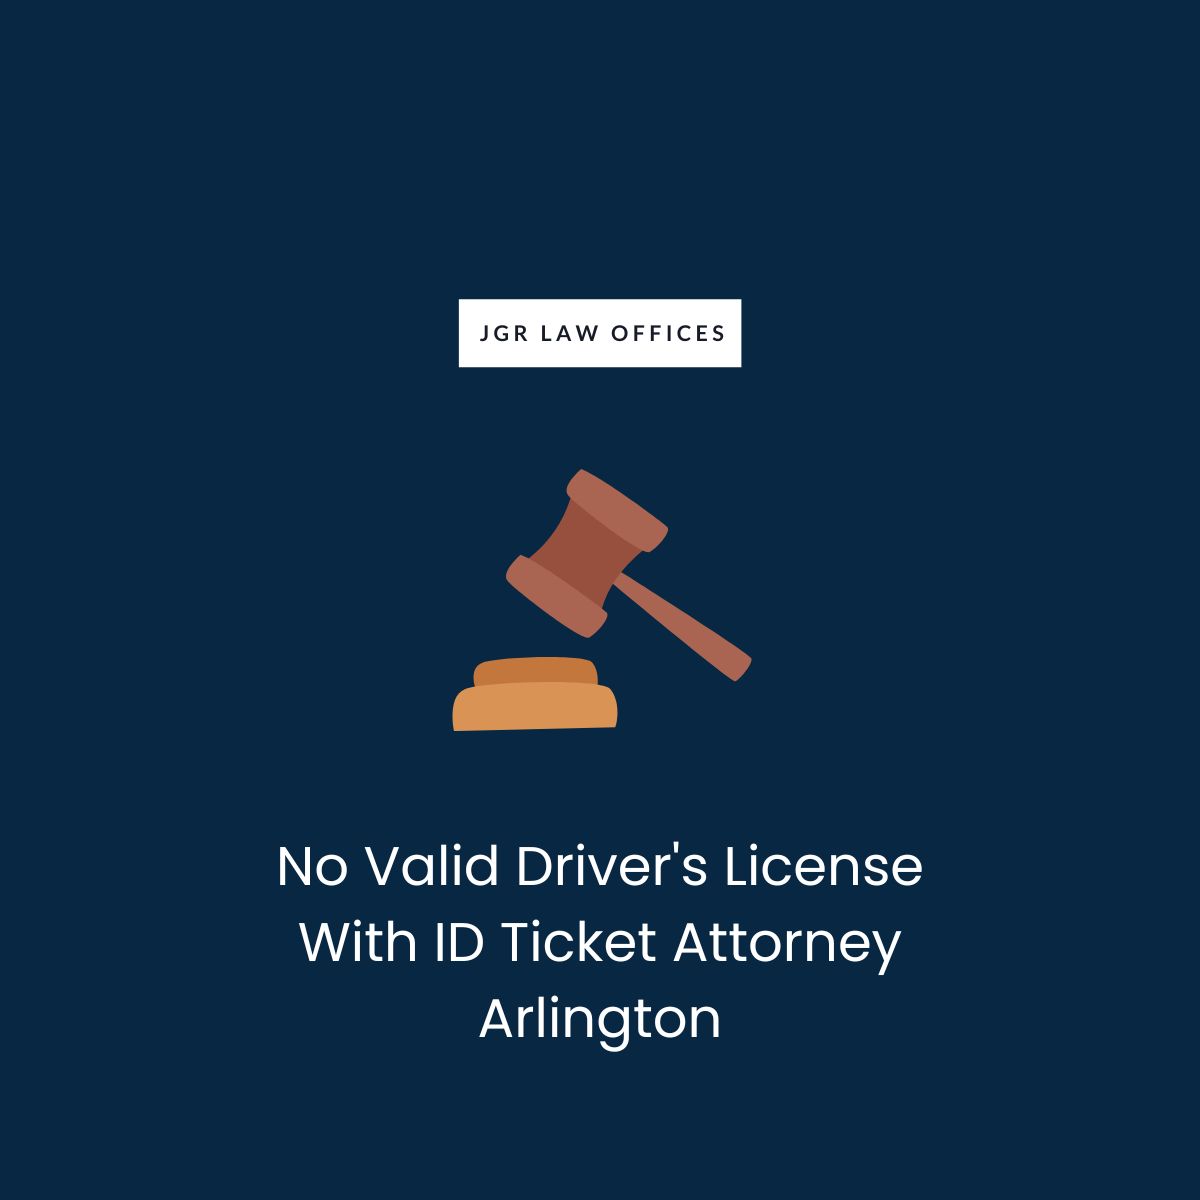 No Valid Driver's License With ID Ticket Attorney Arlington